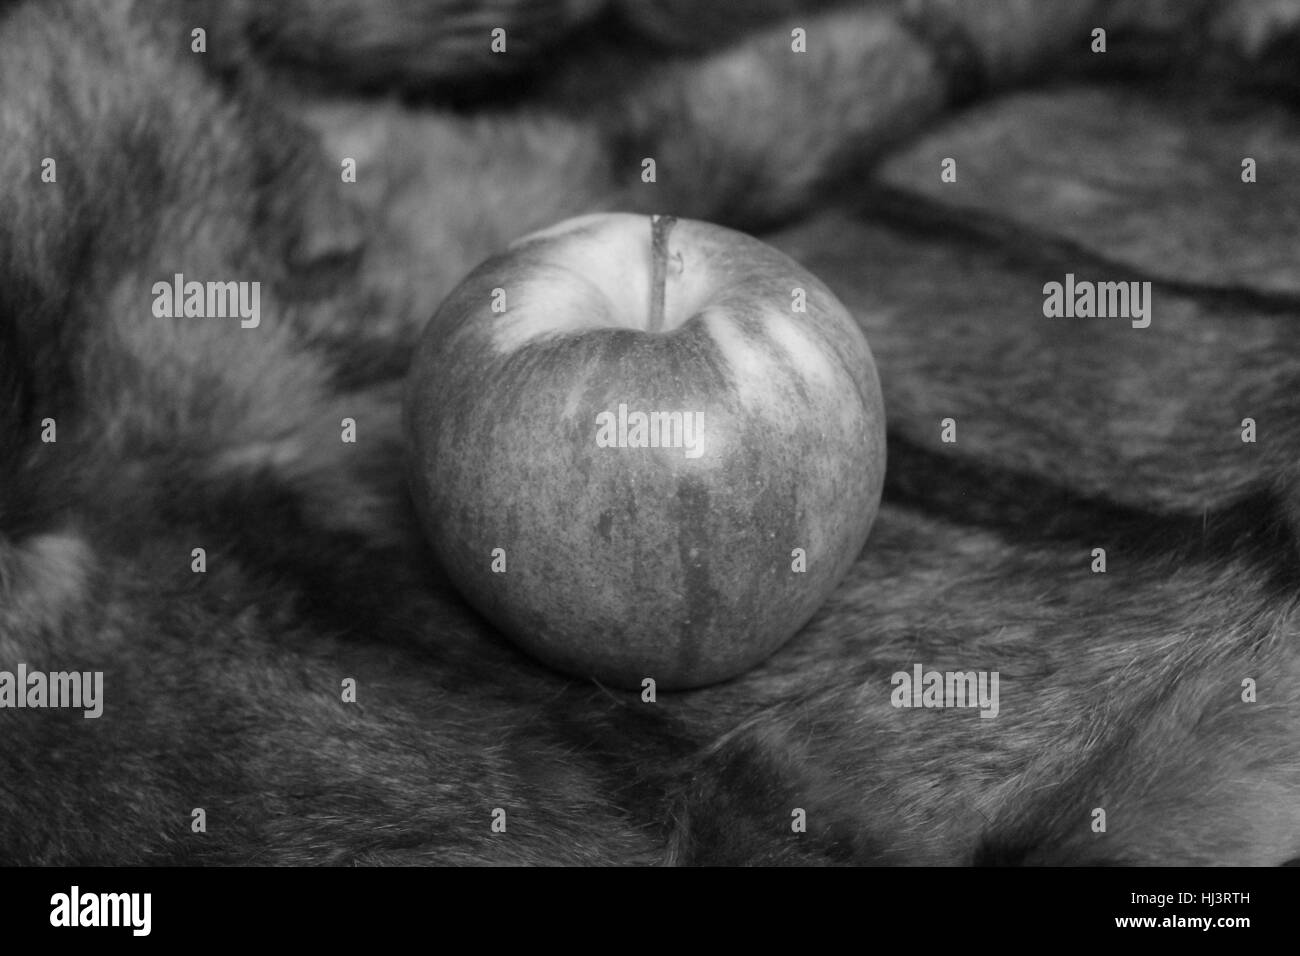 appetizing  ripe big apple lay on fur symbol of love and temptation Stock Photo